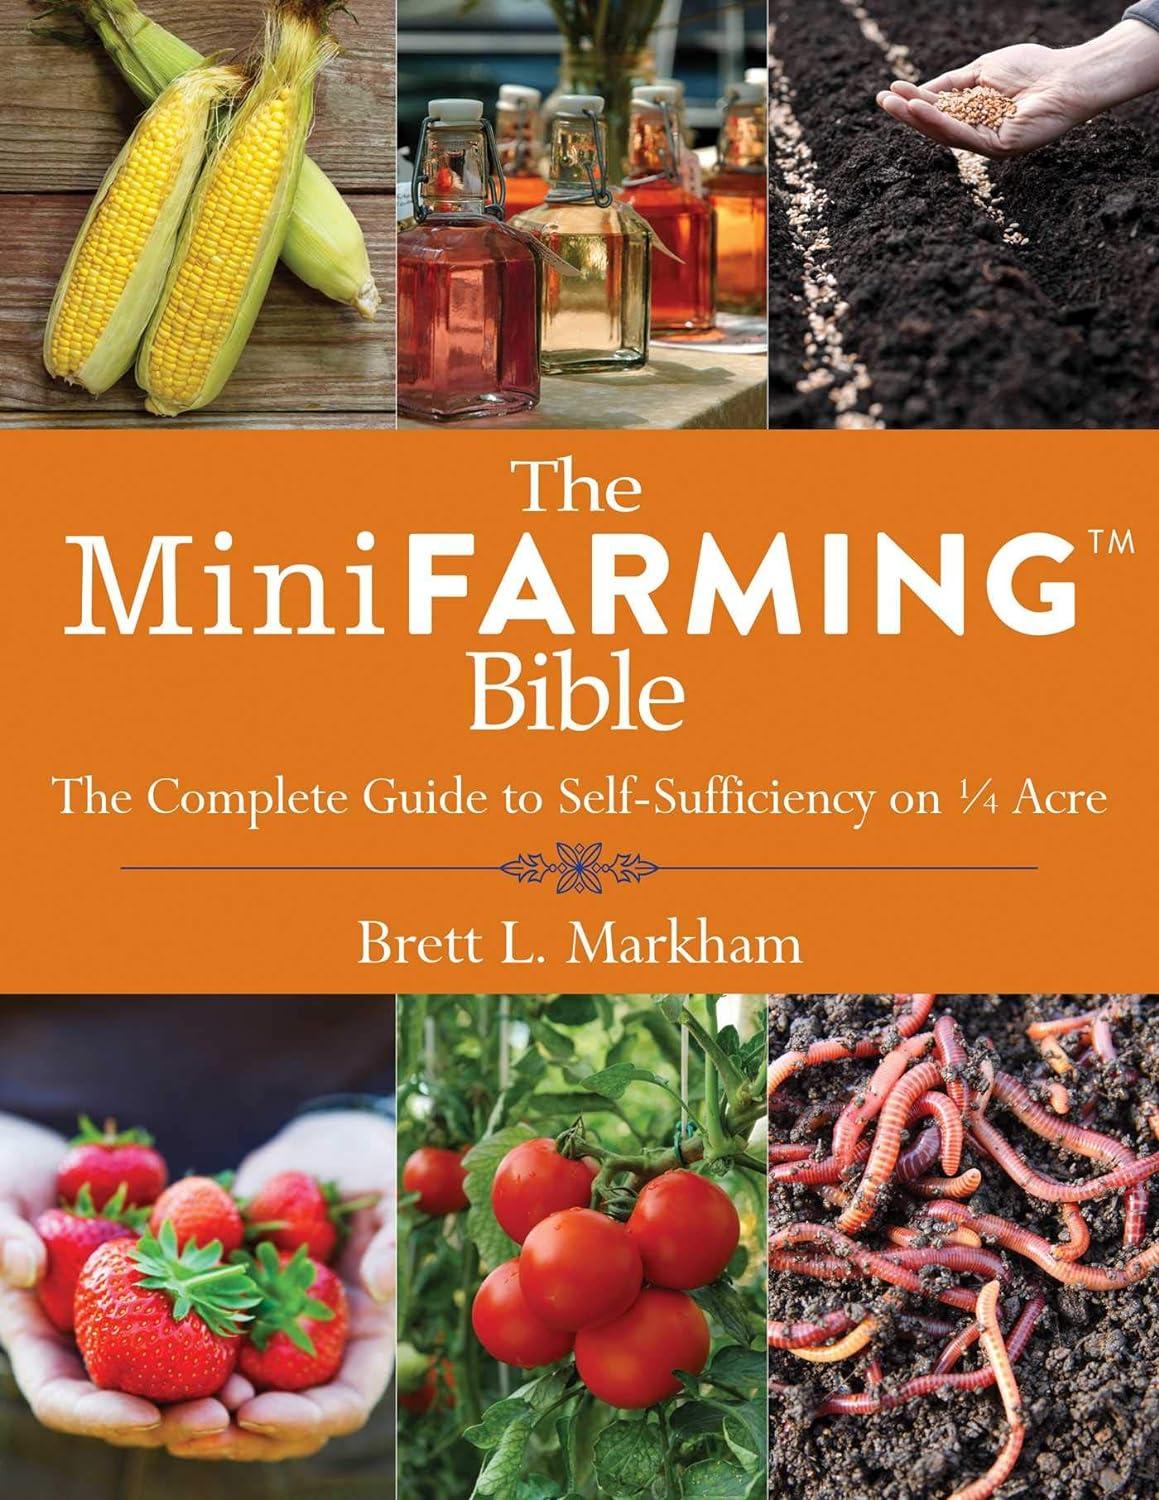 the mini farming bible the complete guide to self sufficiency on ¼ acre 1st edition brett l. markham